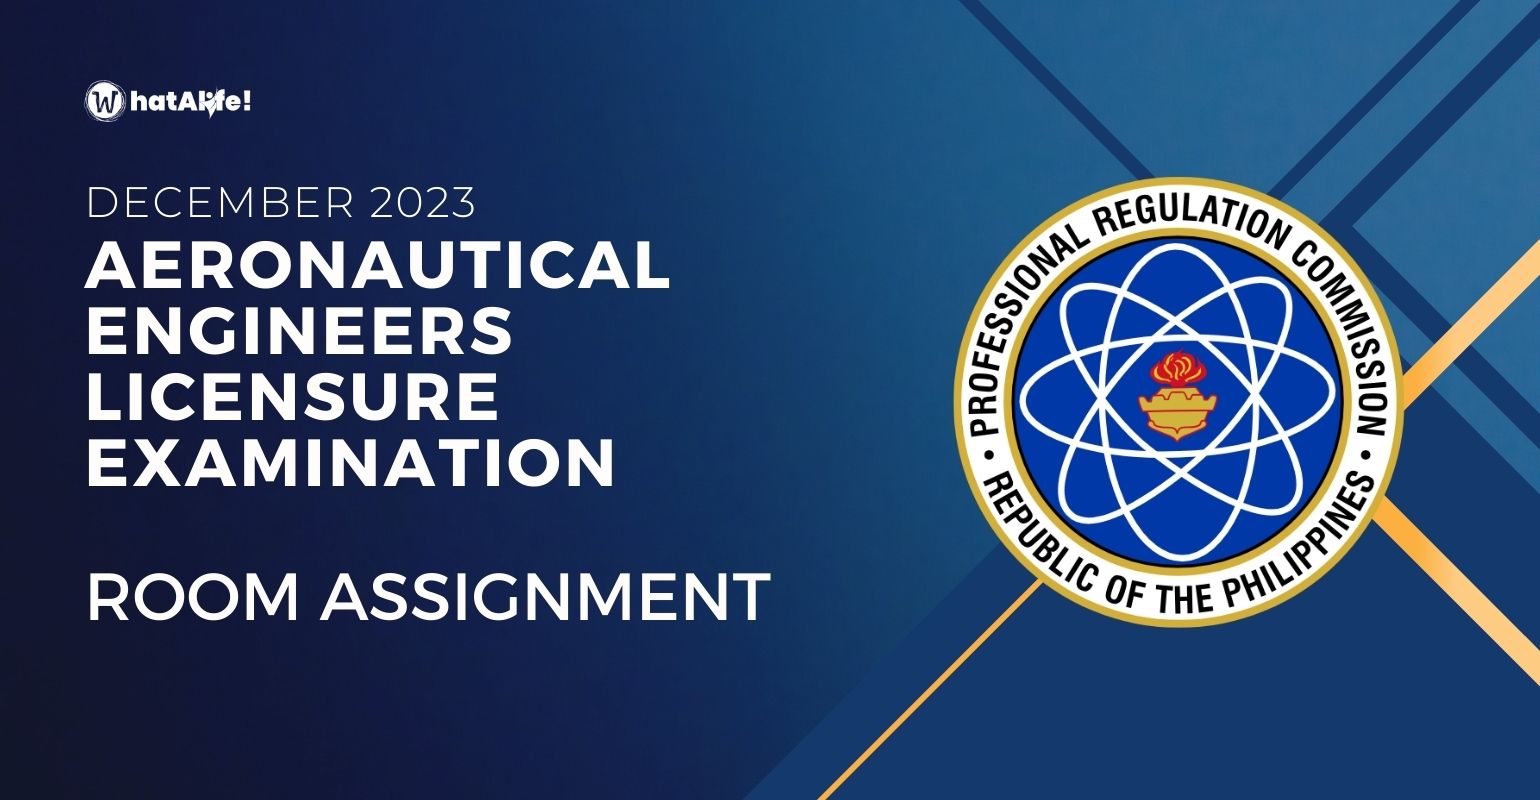 room assignment december 2023 aeronautical engineers licensure exam